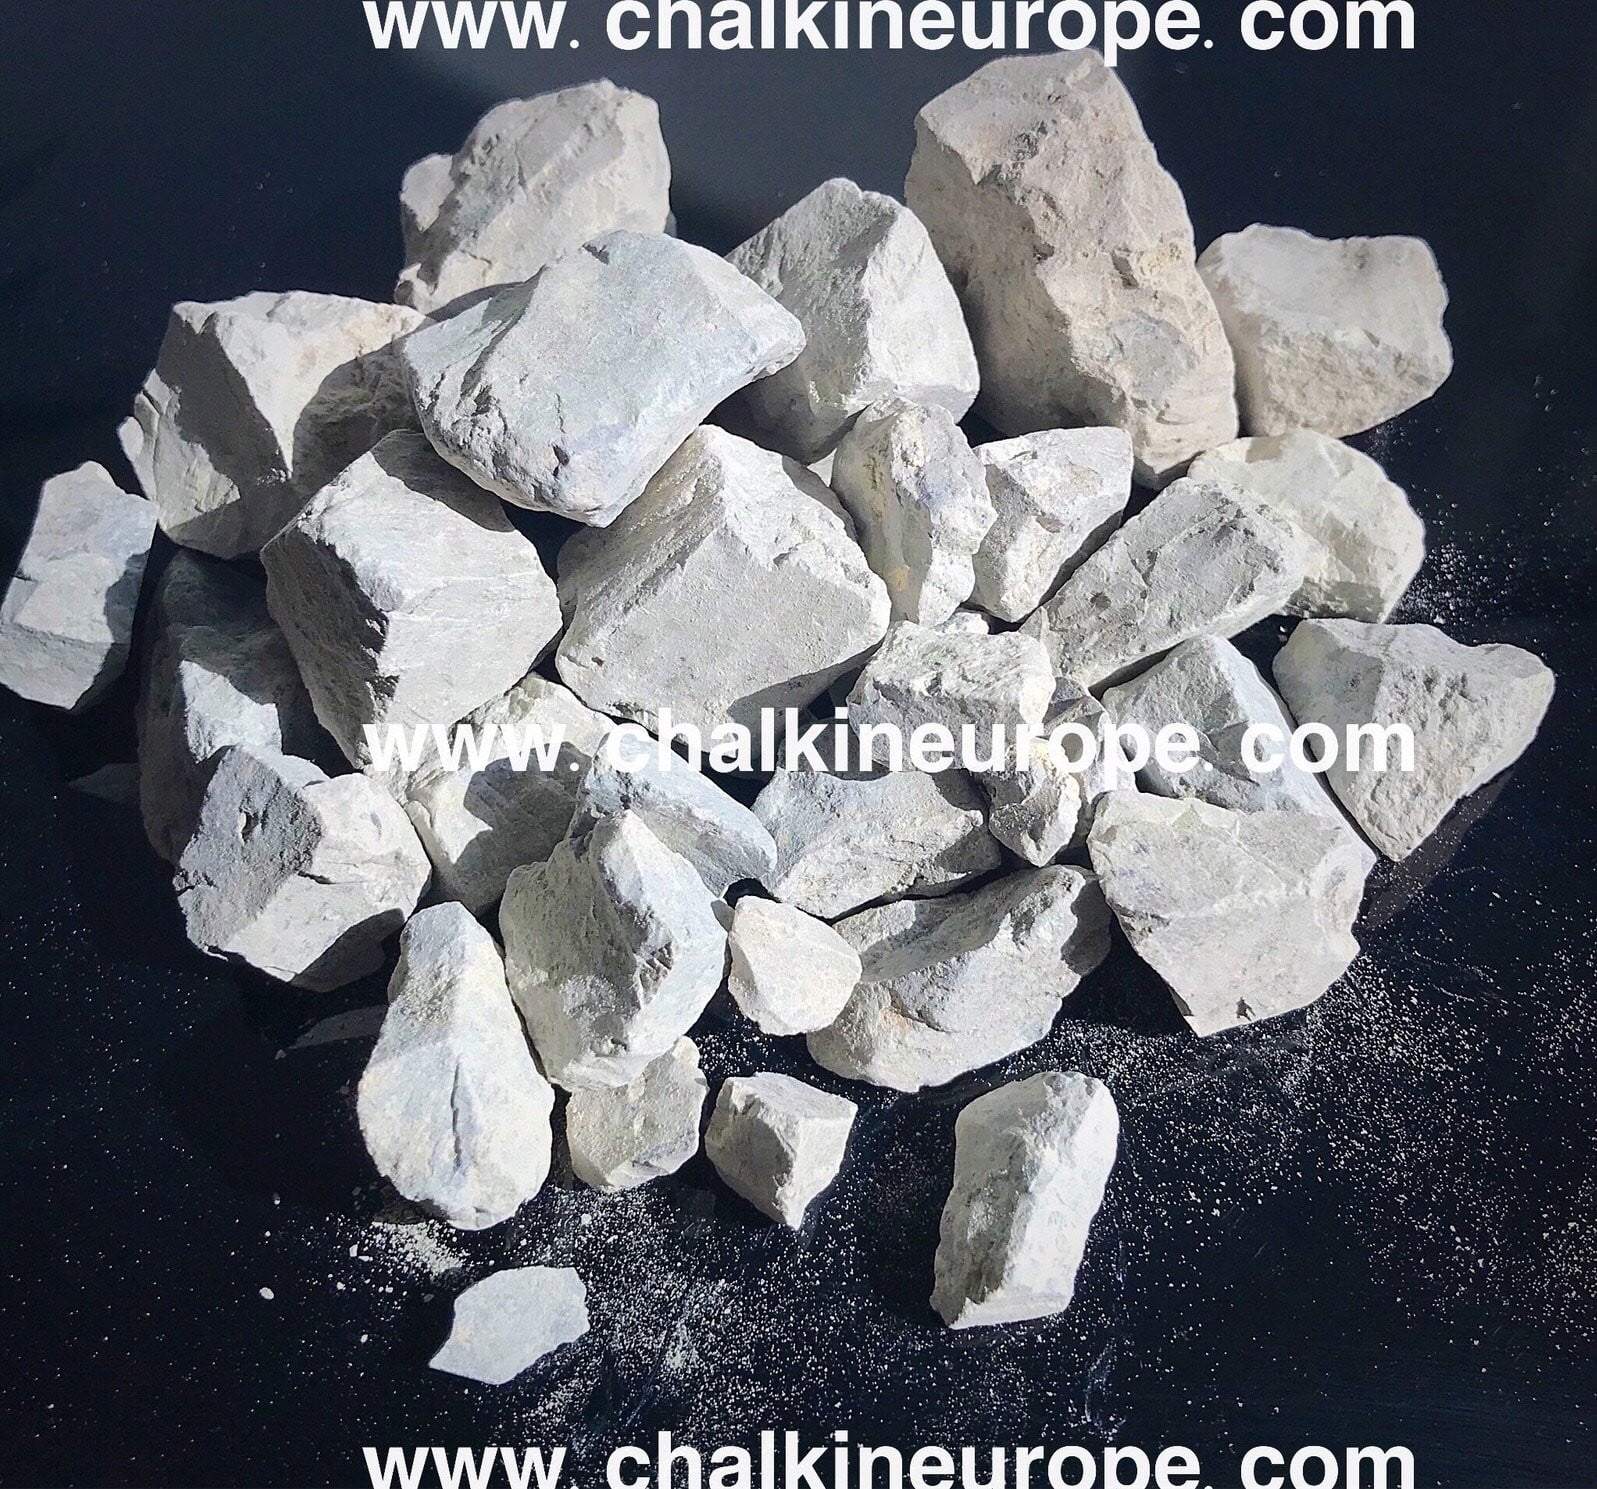 Grey/ Gray Asian Clay - Chalkineurope